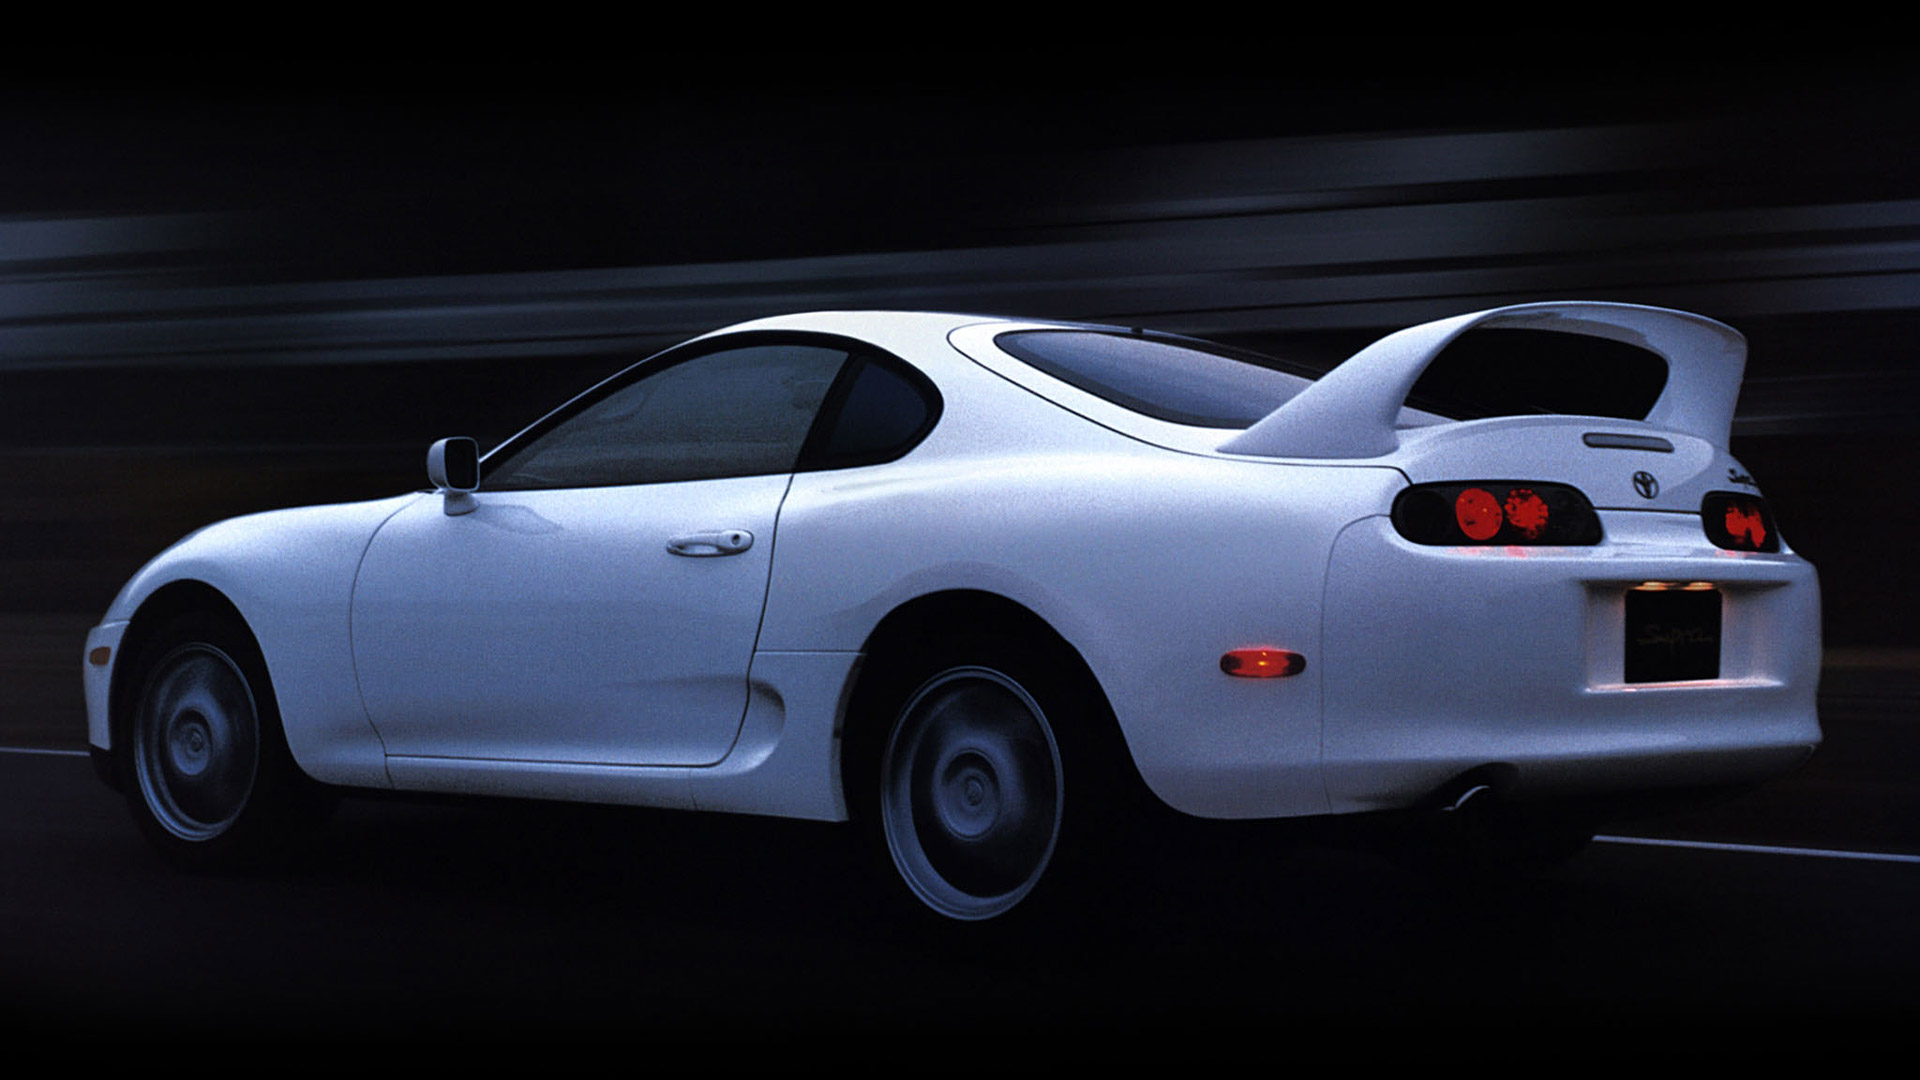  1997 Toyota Supra Wallpaper.